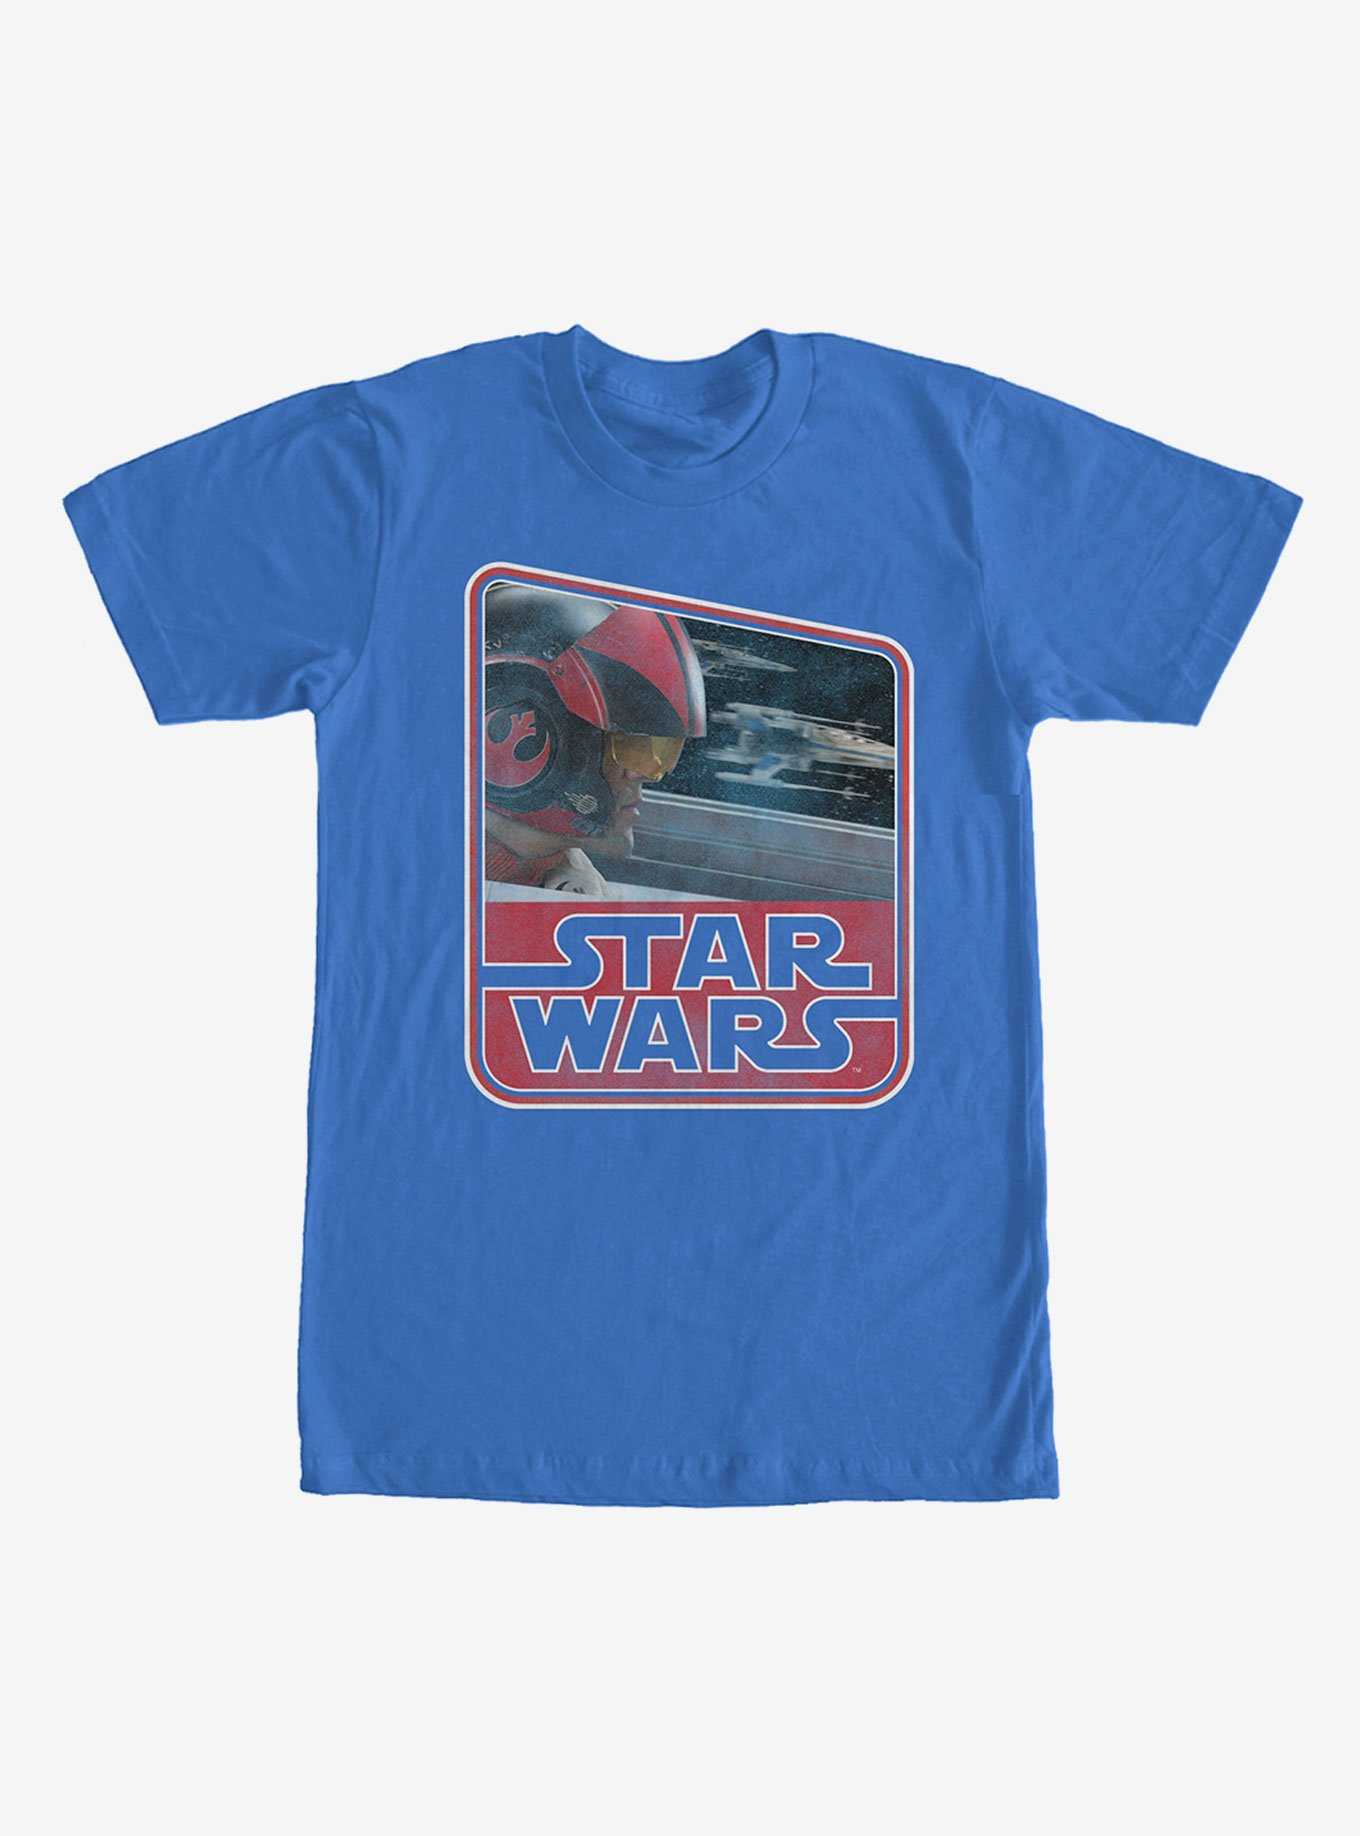 Star Wars Retro Poe Dameron T-Shirt, , hi-res